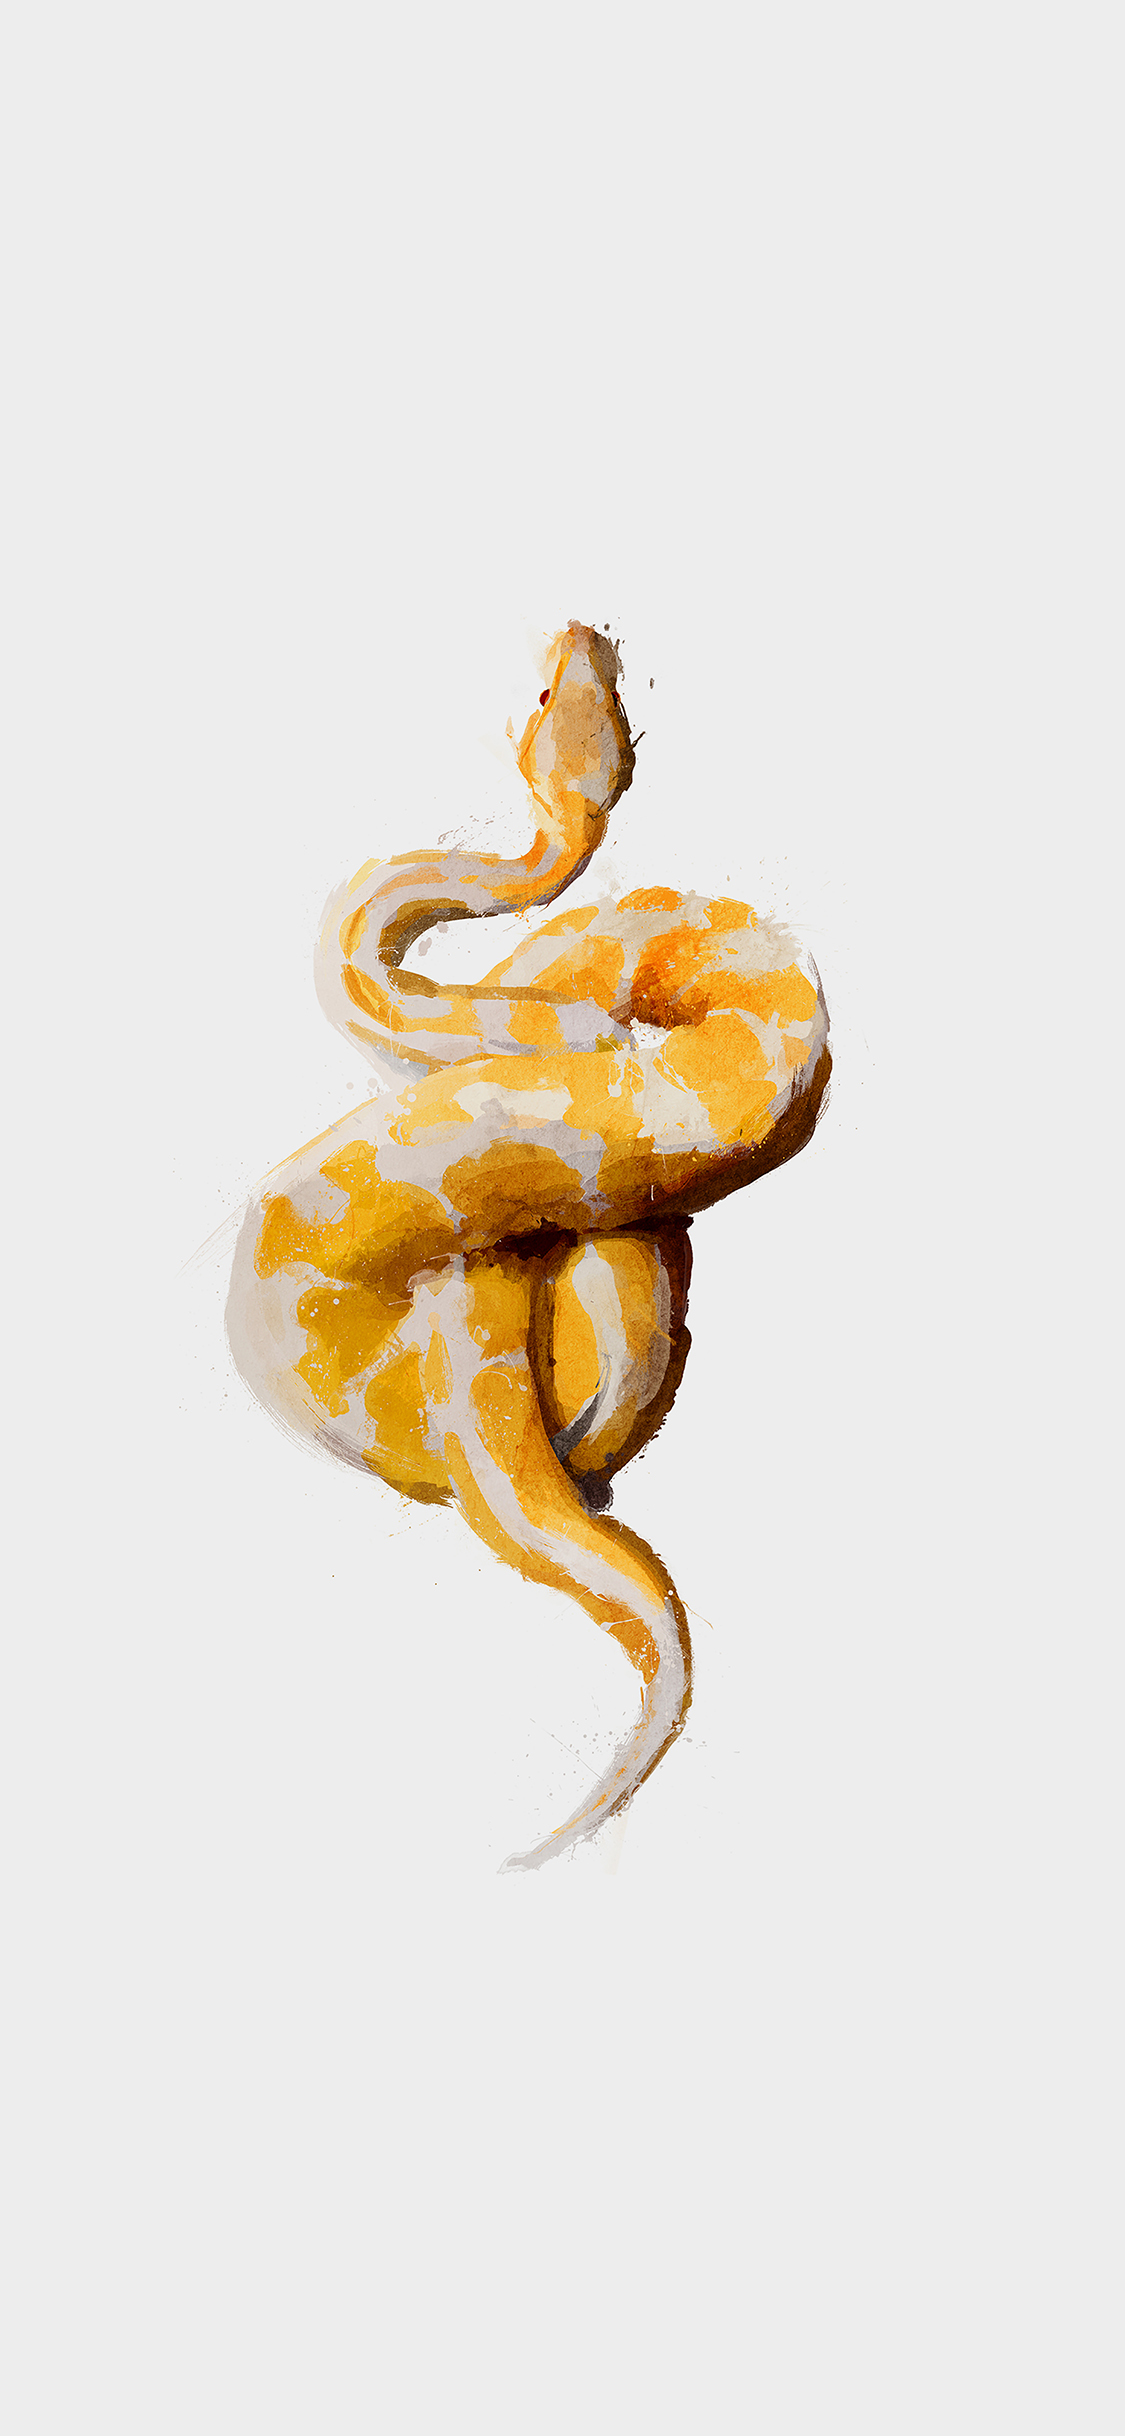 iPhone X wallpaper. snake illust minimal art